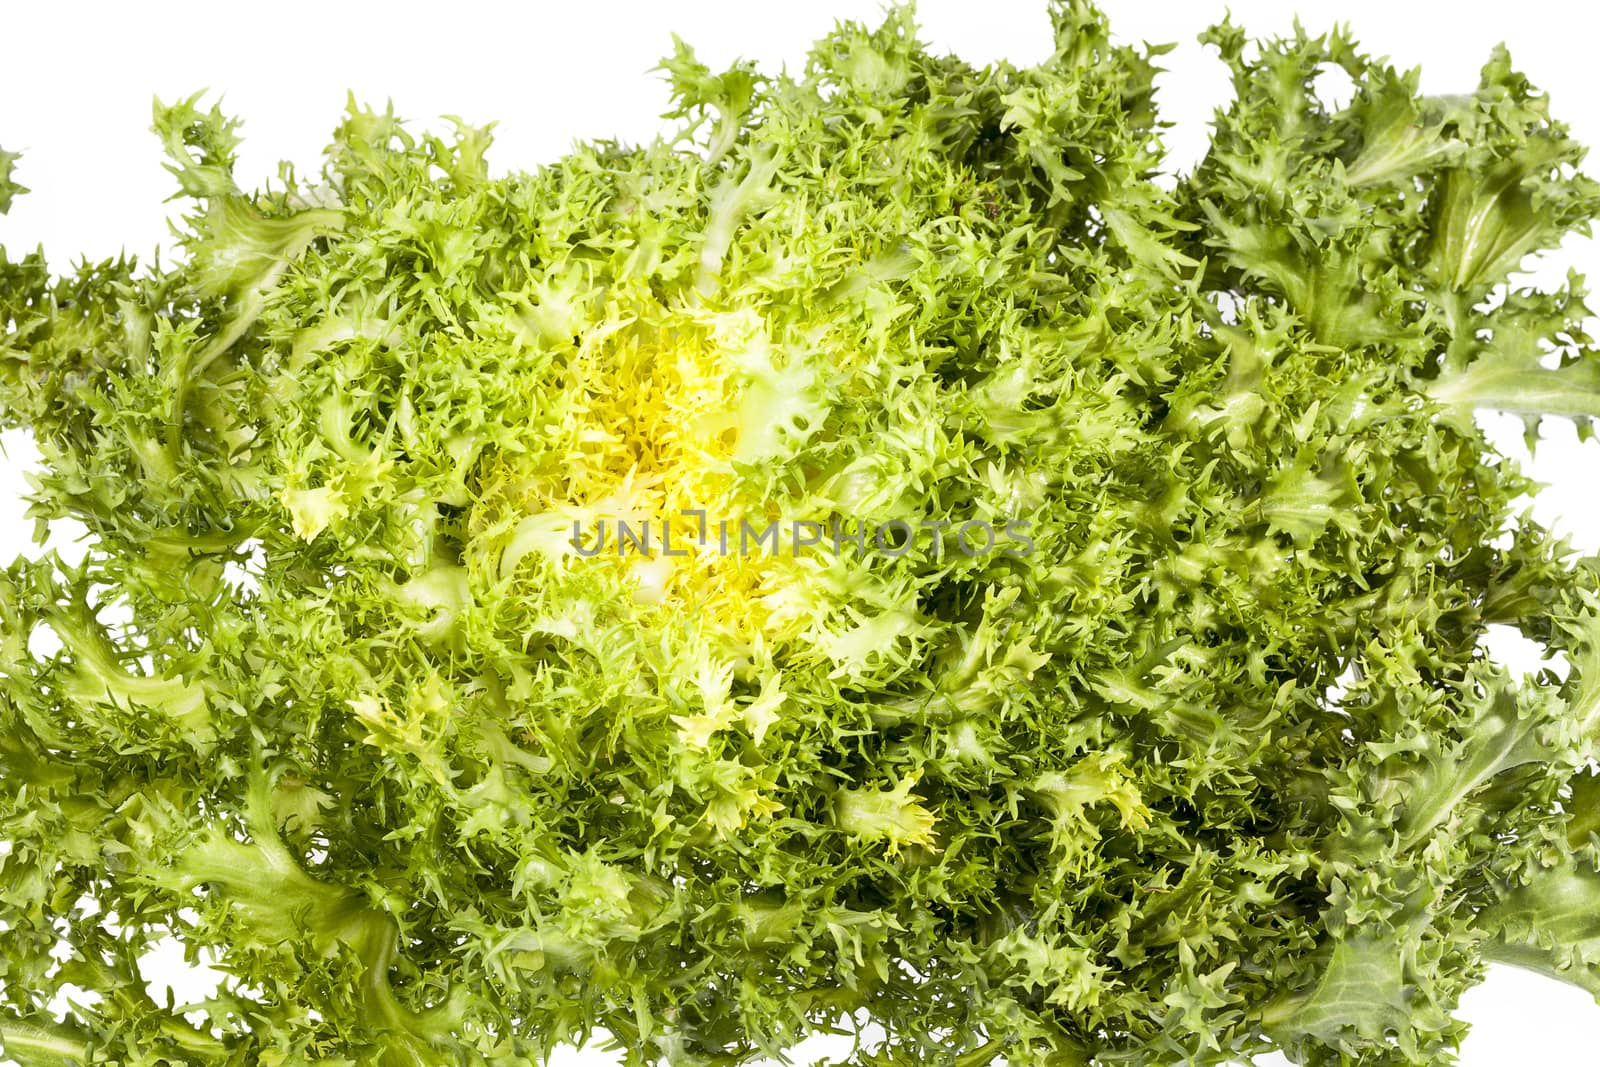 Salad Cichorium endivia on white background.